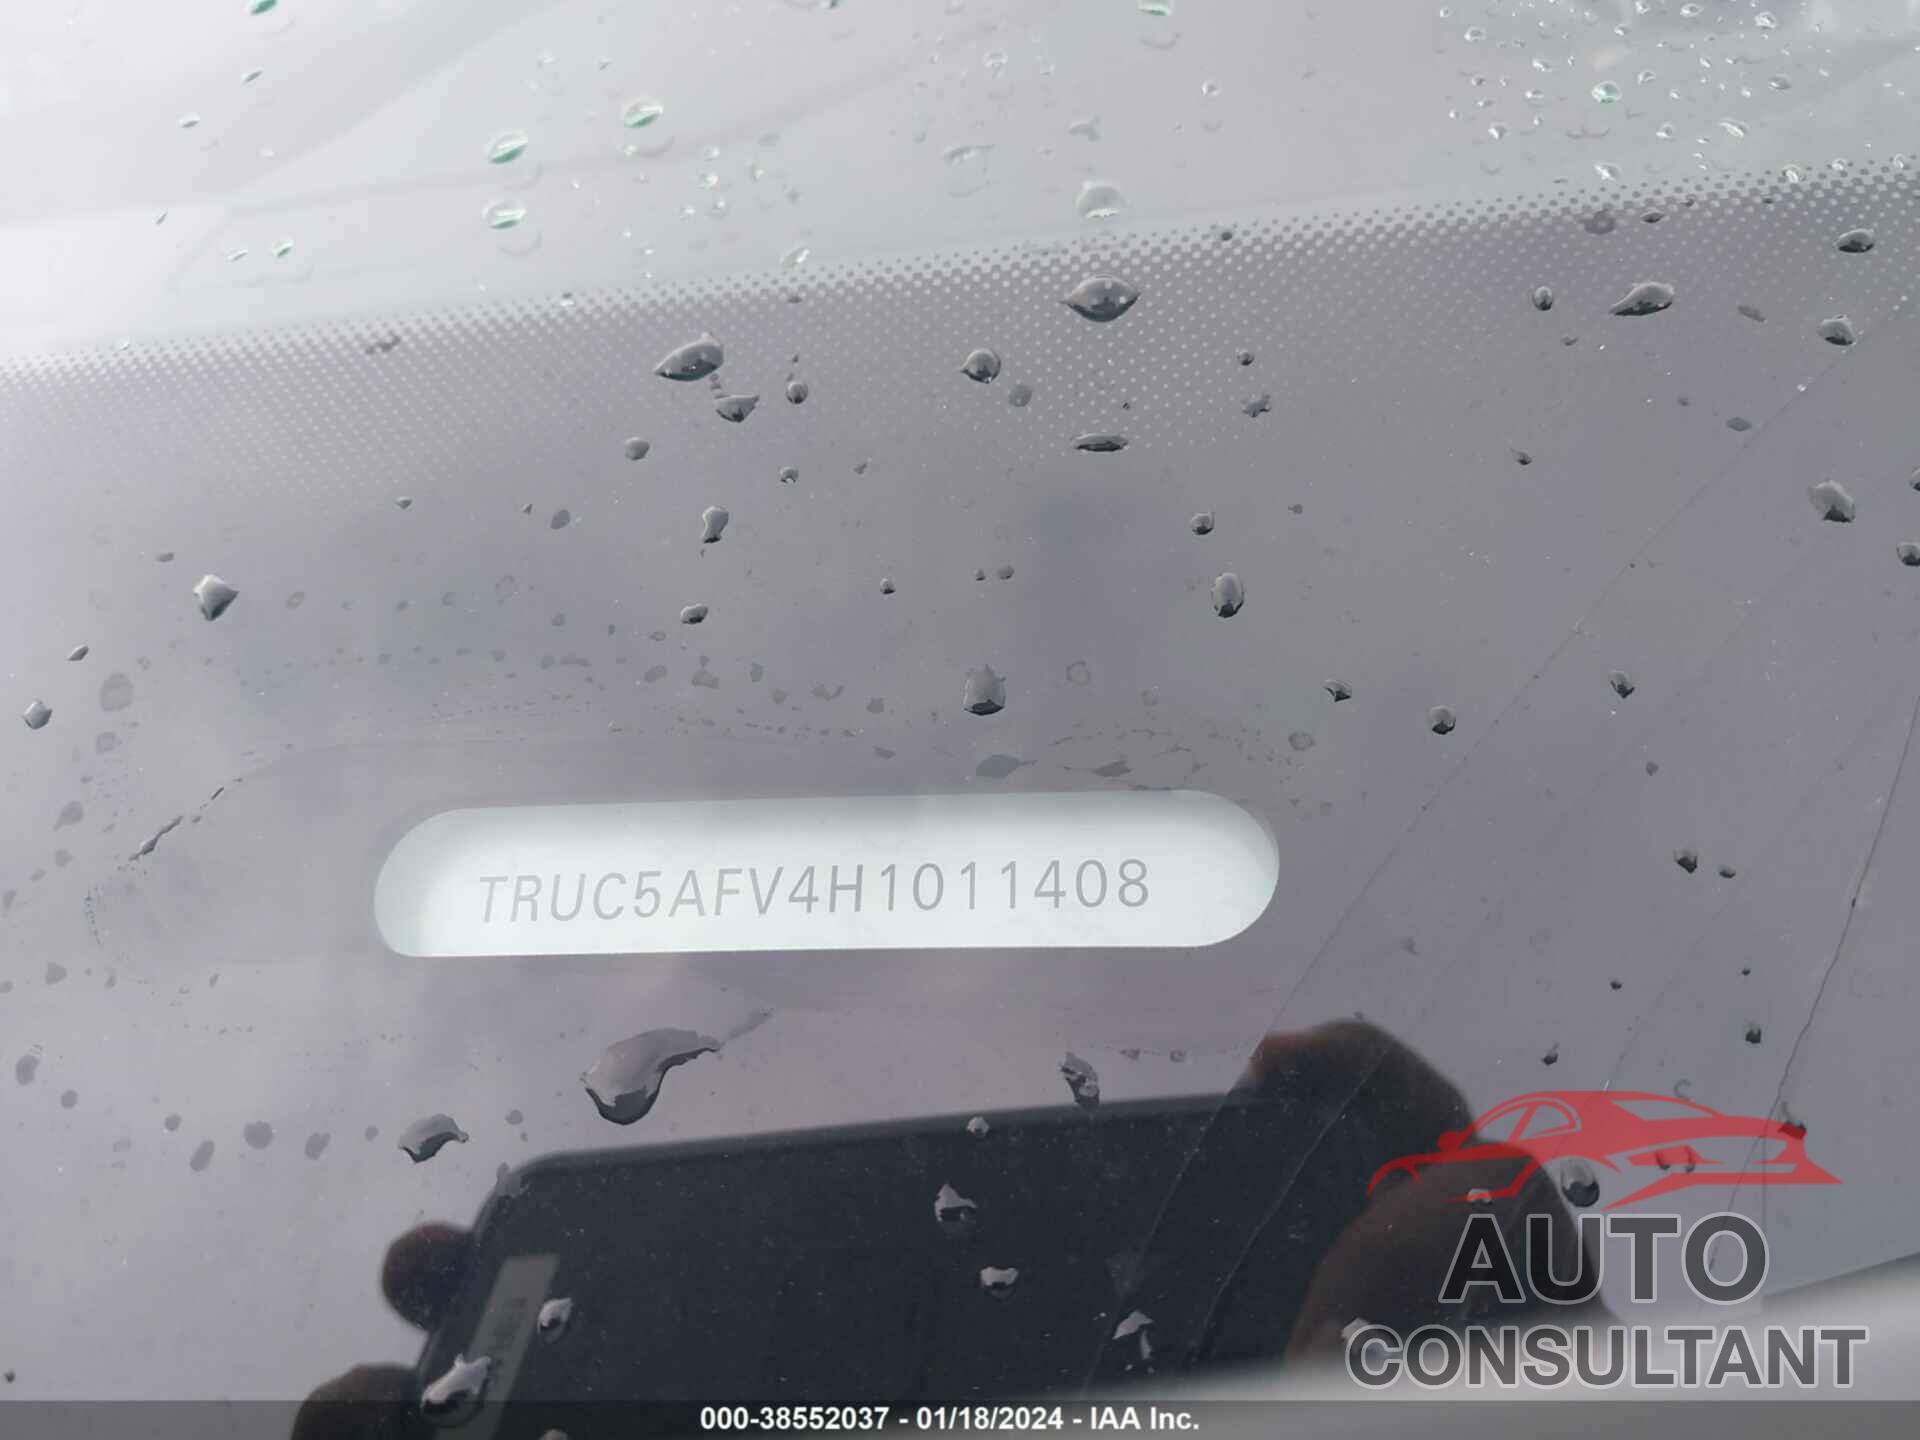 AUDI TT 2017 - TRUC5AFV4H1011408